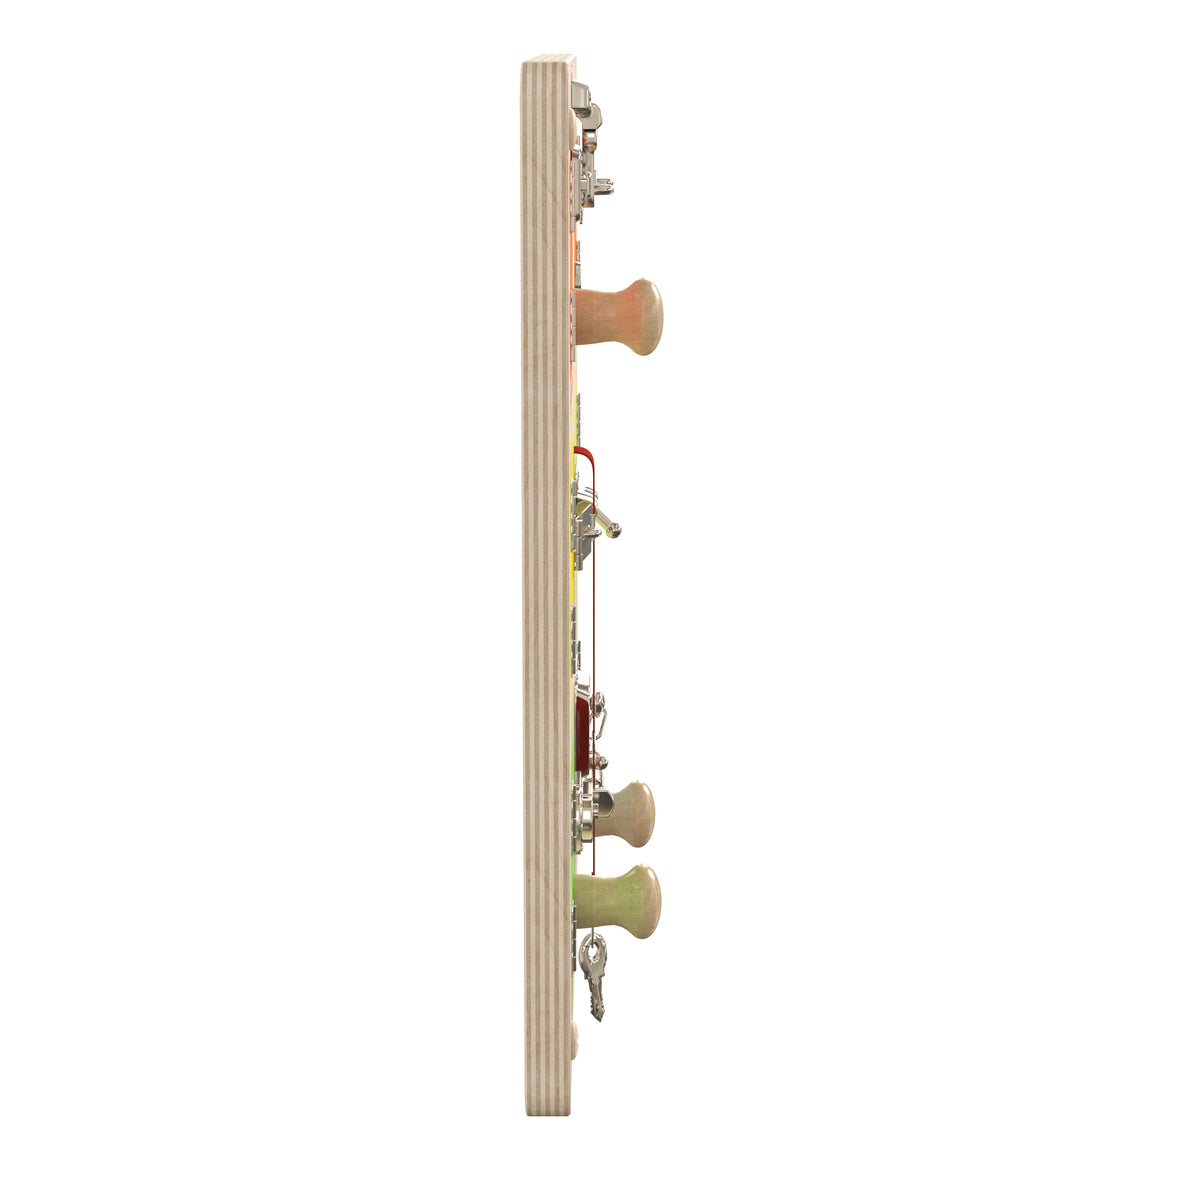 Commercial Grade STEAM Wall Wooden Locks & Buckles Accessory Board - Multicolor